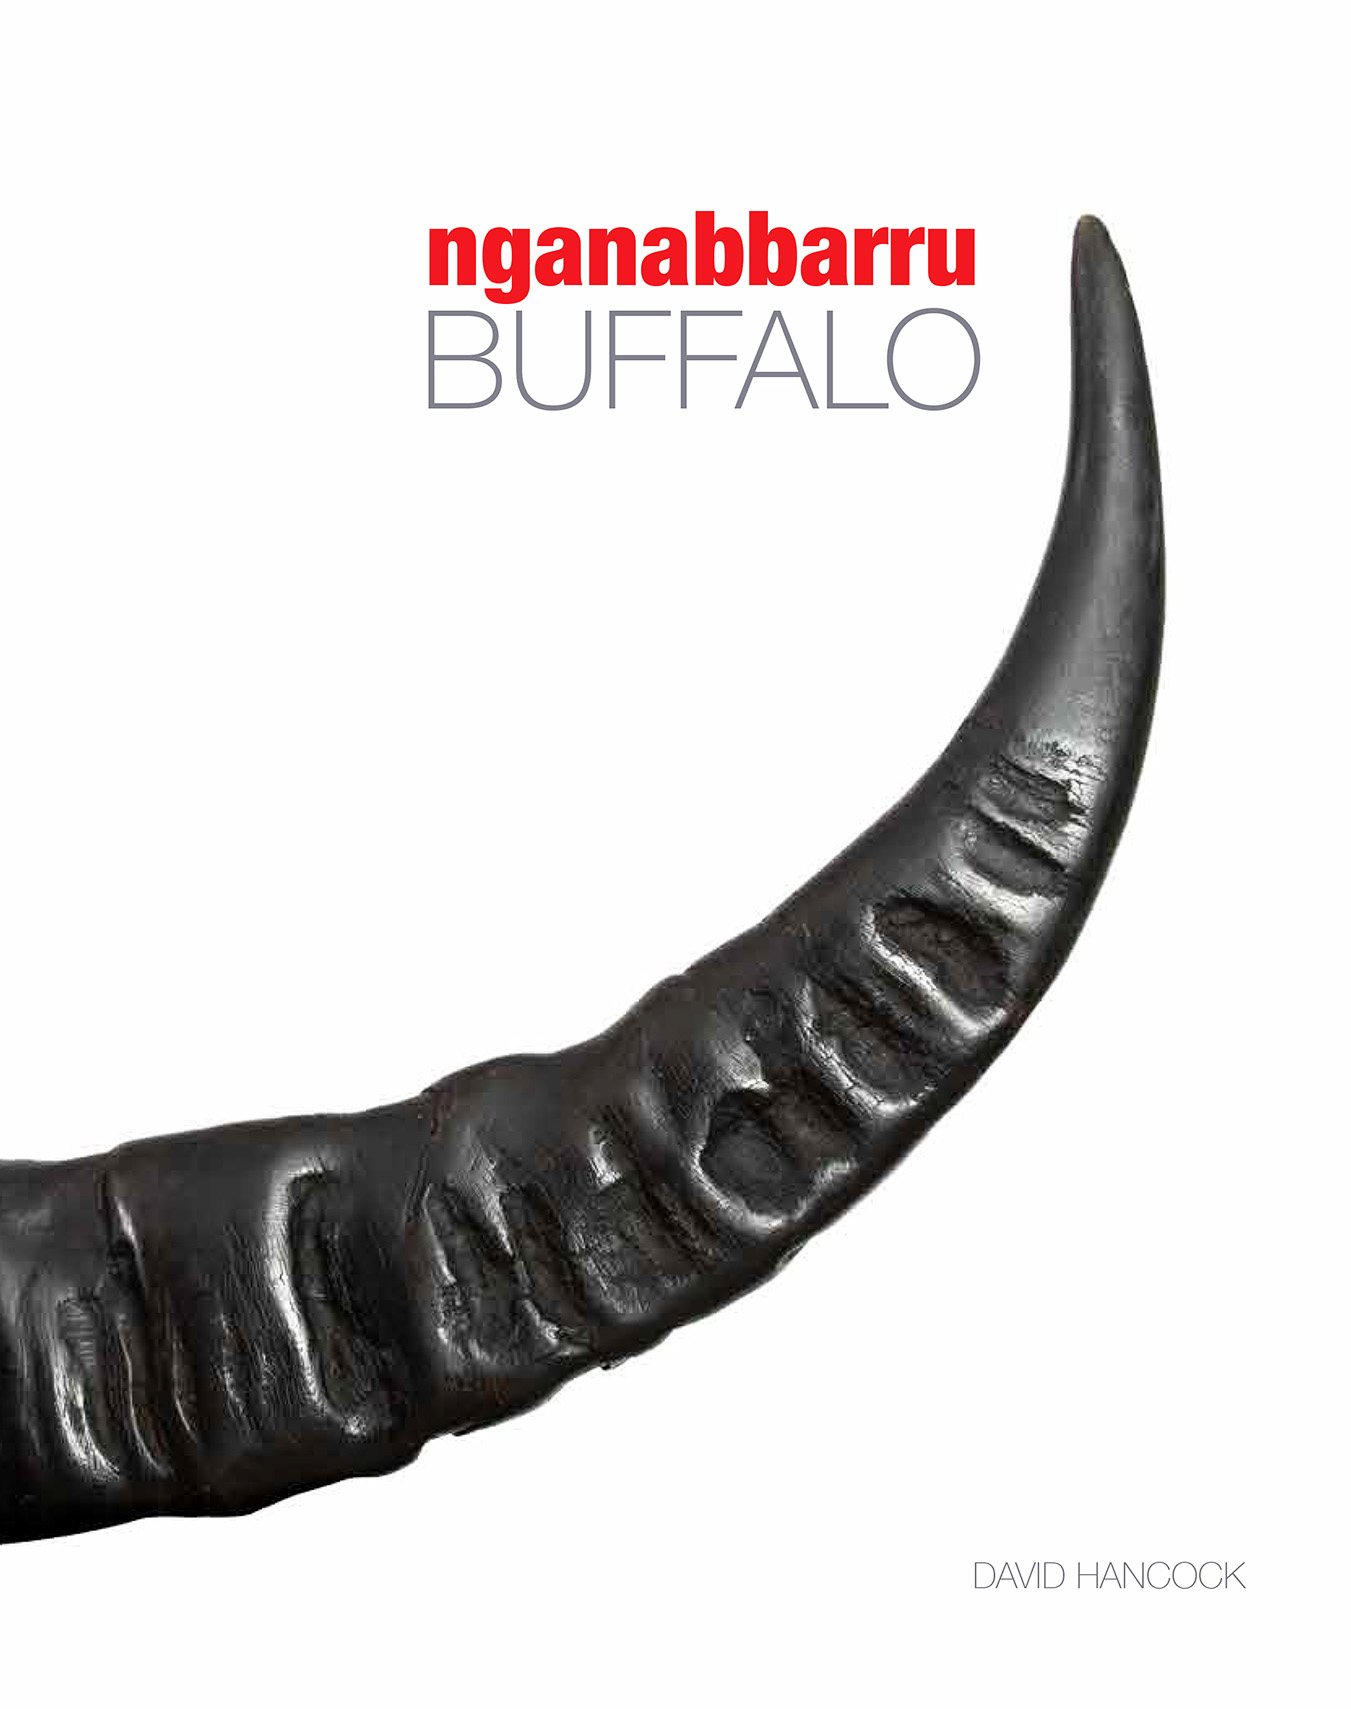 Nganabbarru Buffalo